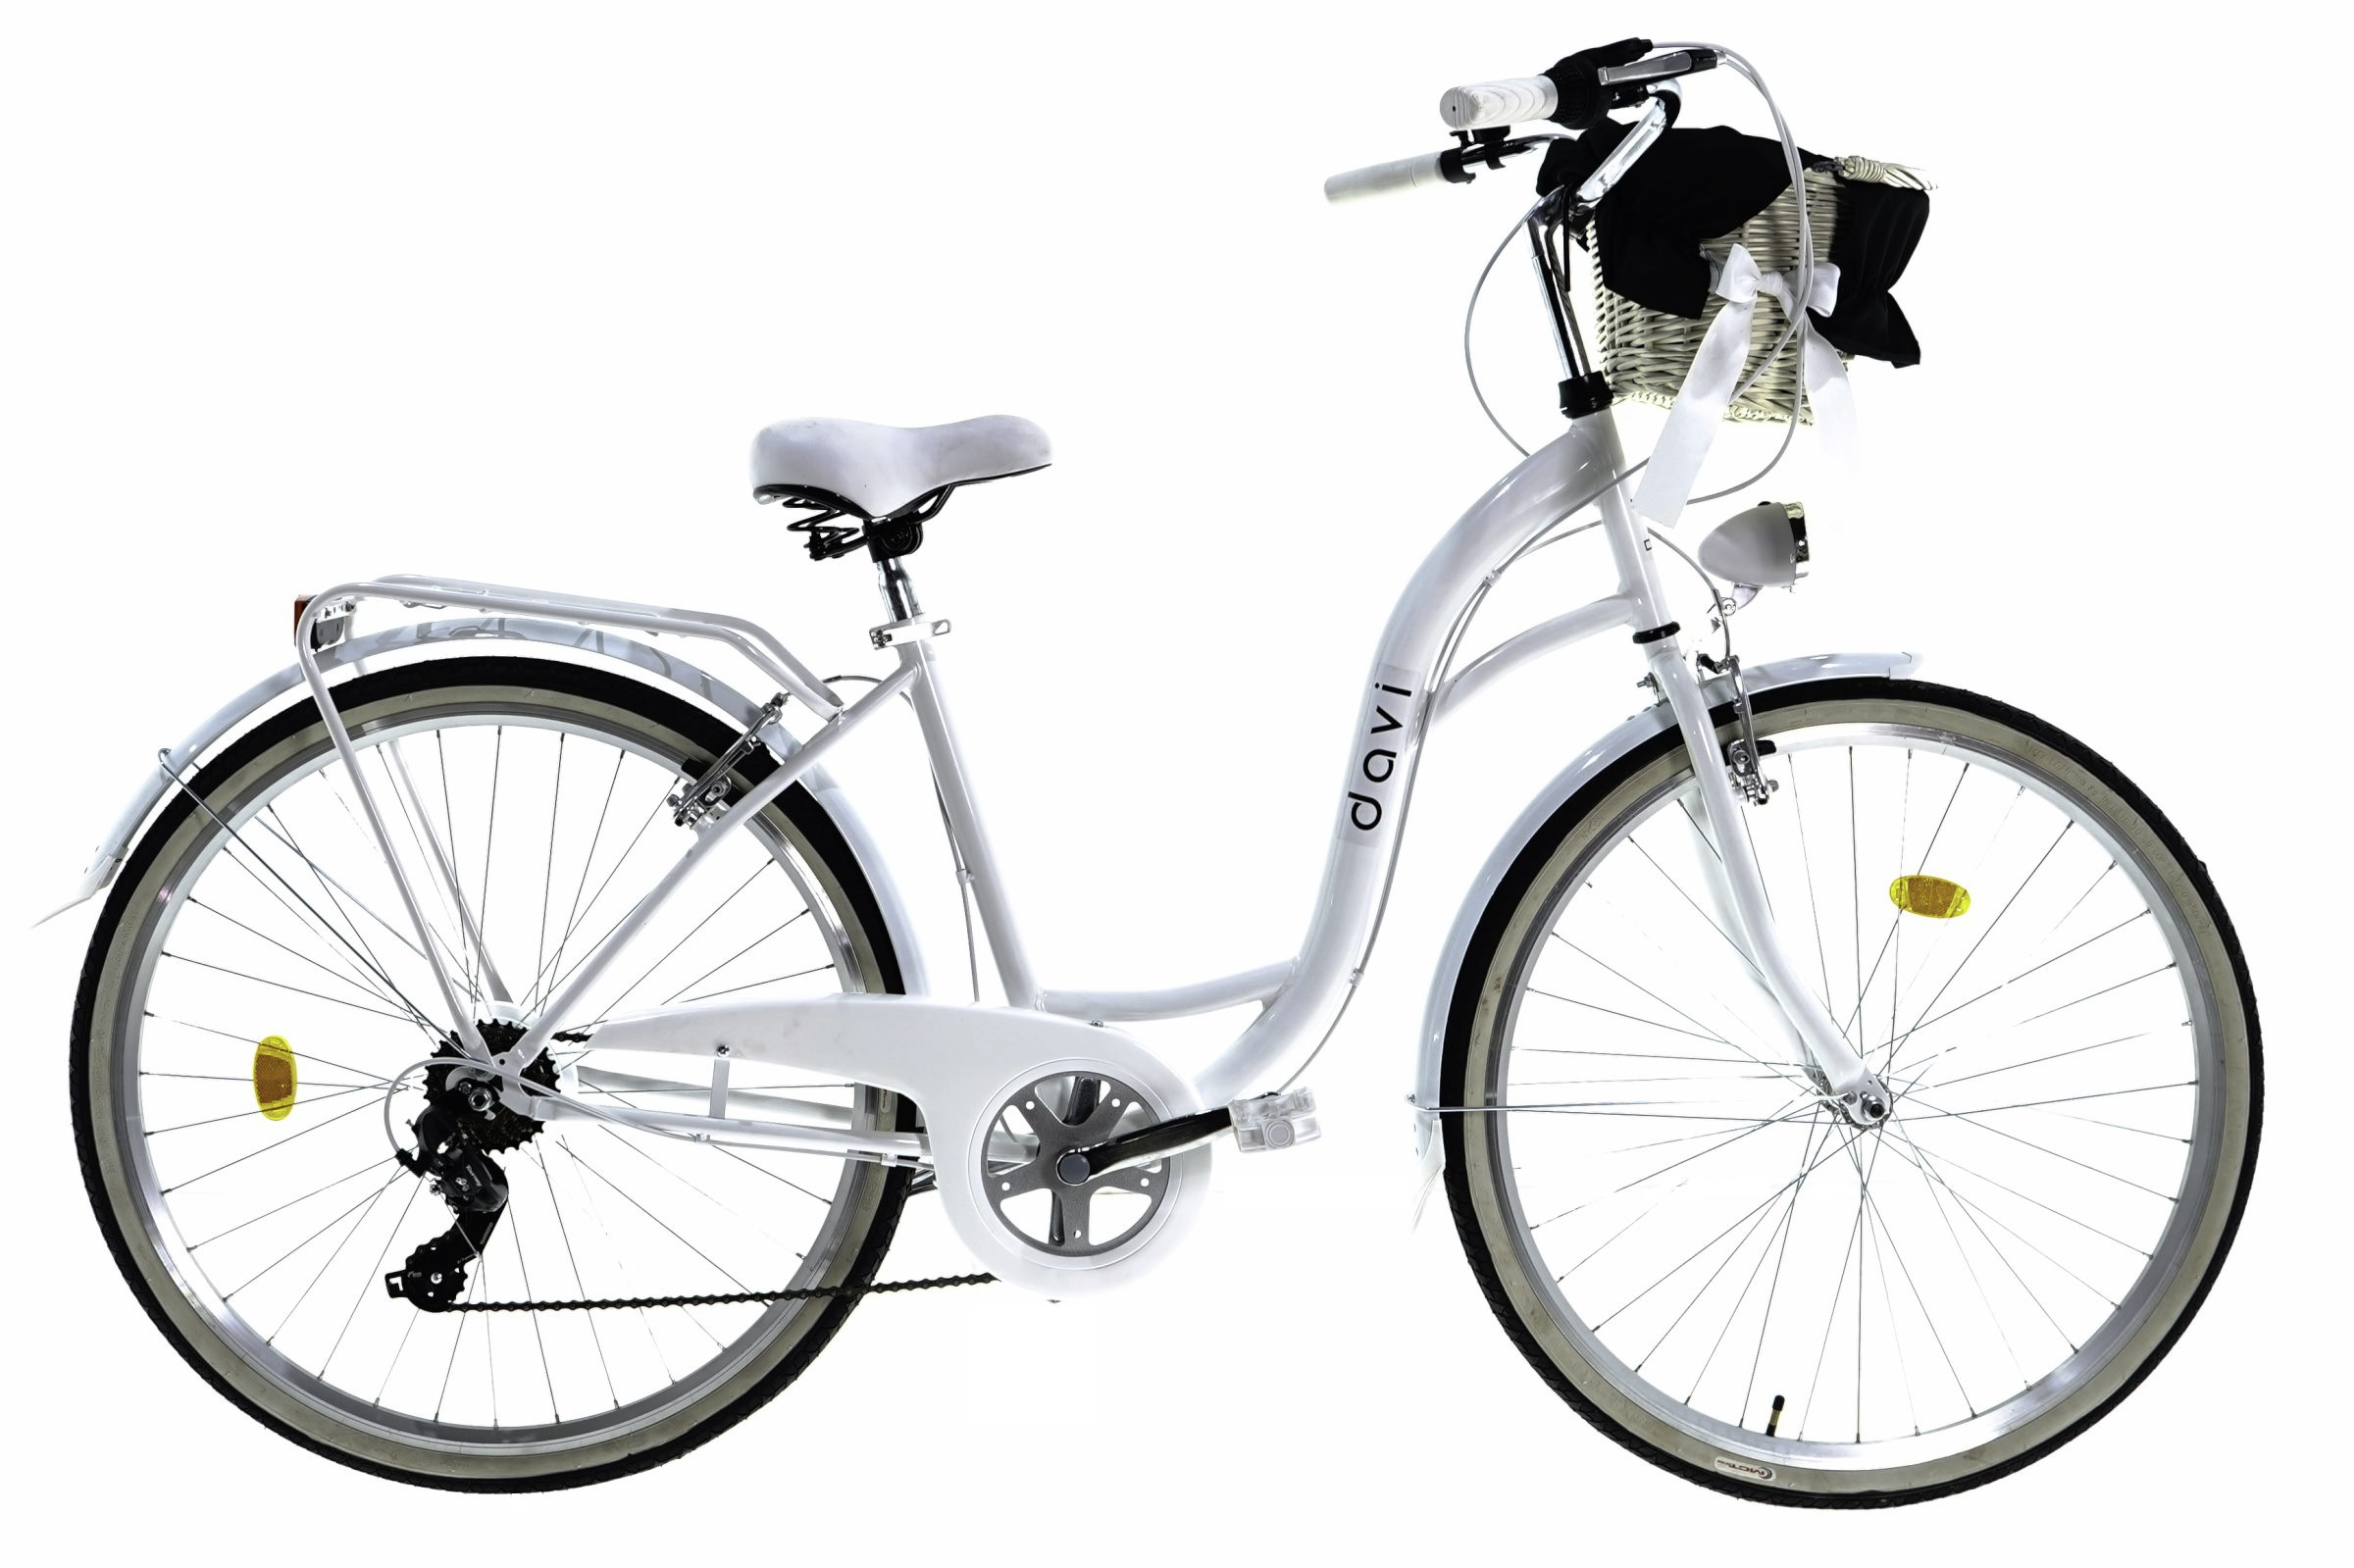 Дамски велосипед Davi Emma, 7-скоростен Shimano, 160-185 cm височина, колела 28″, Бял